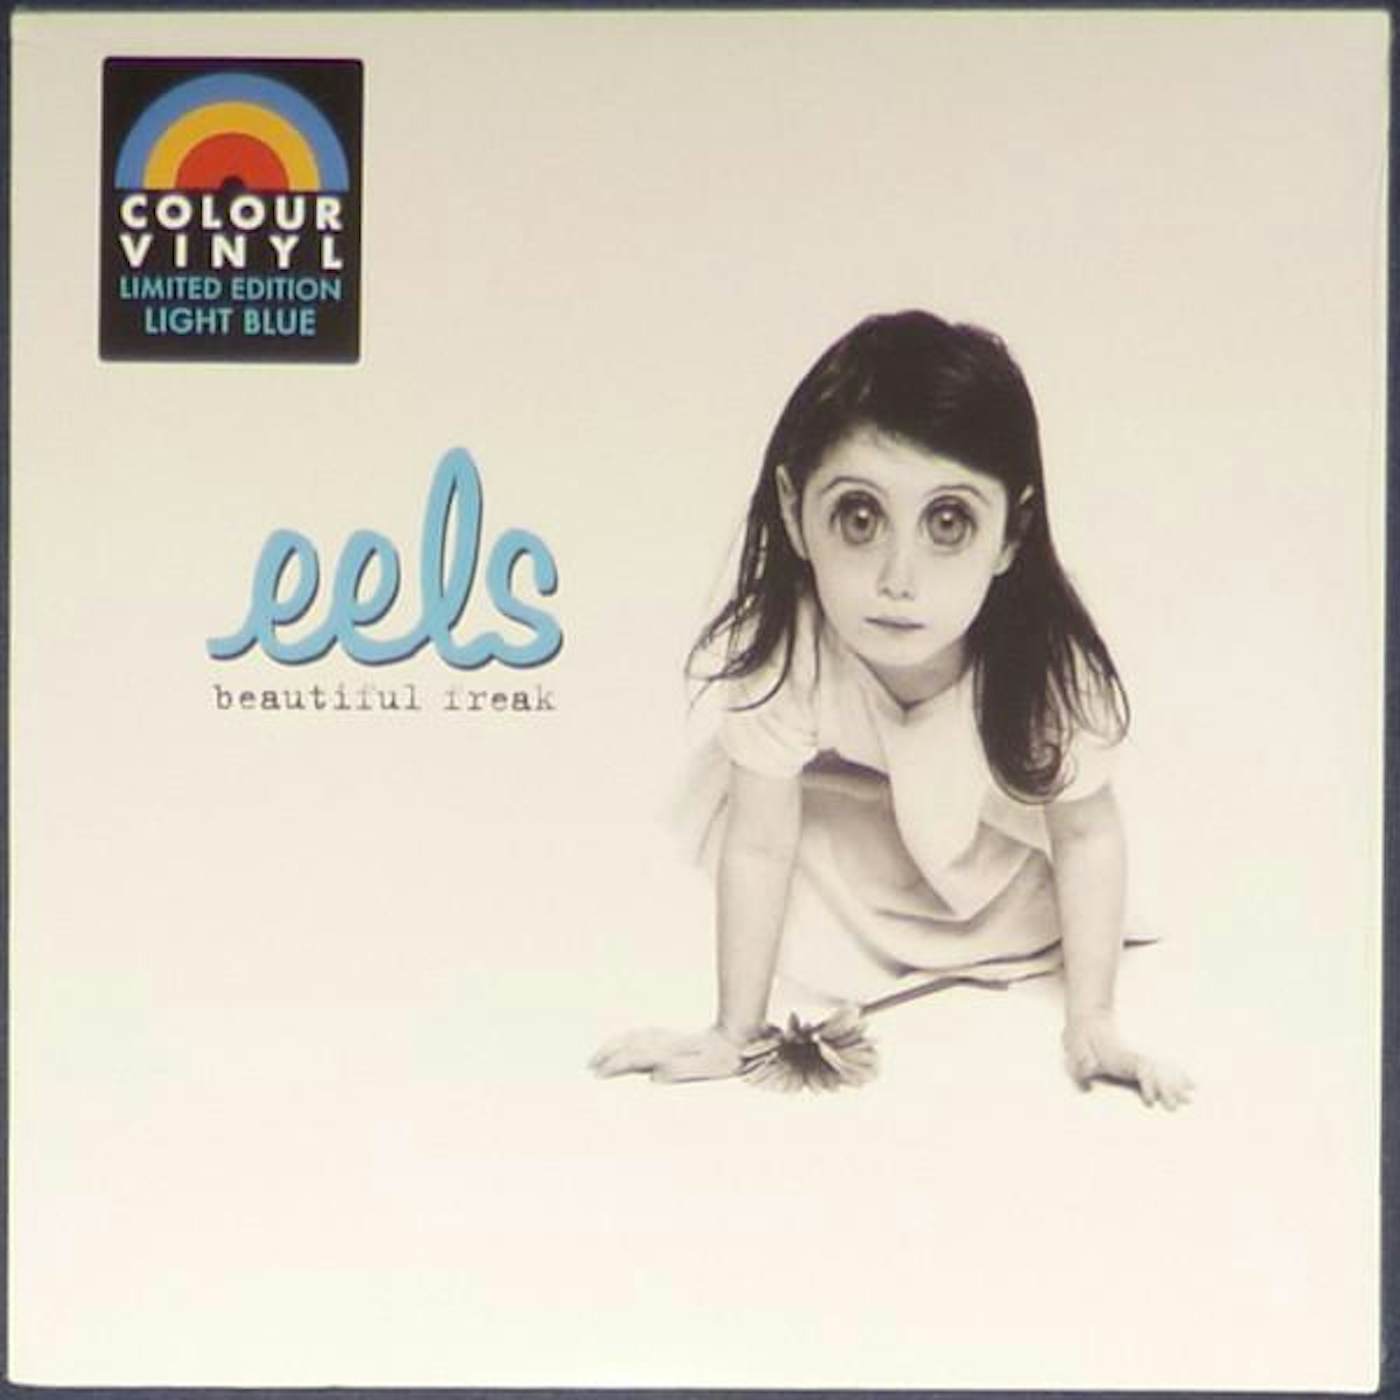 Eels BEAUTIFUL FREAK Vinyl Record